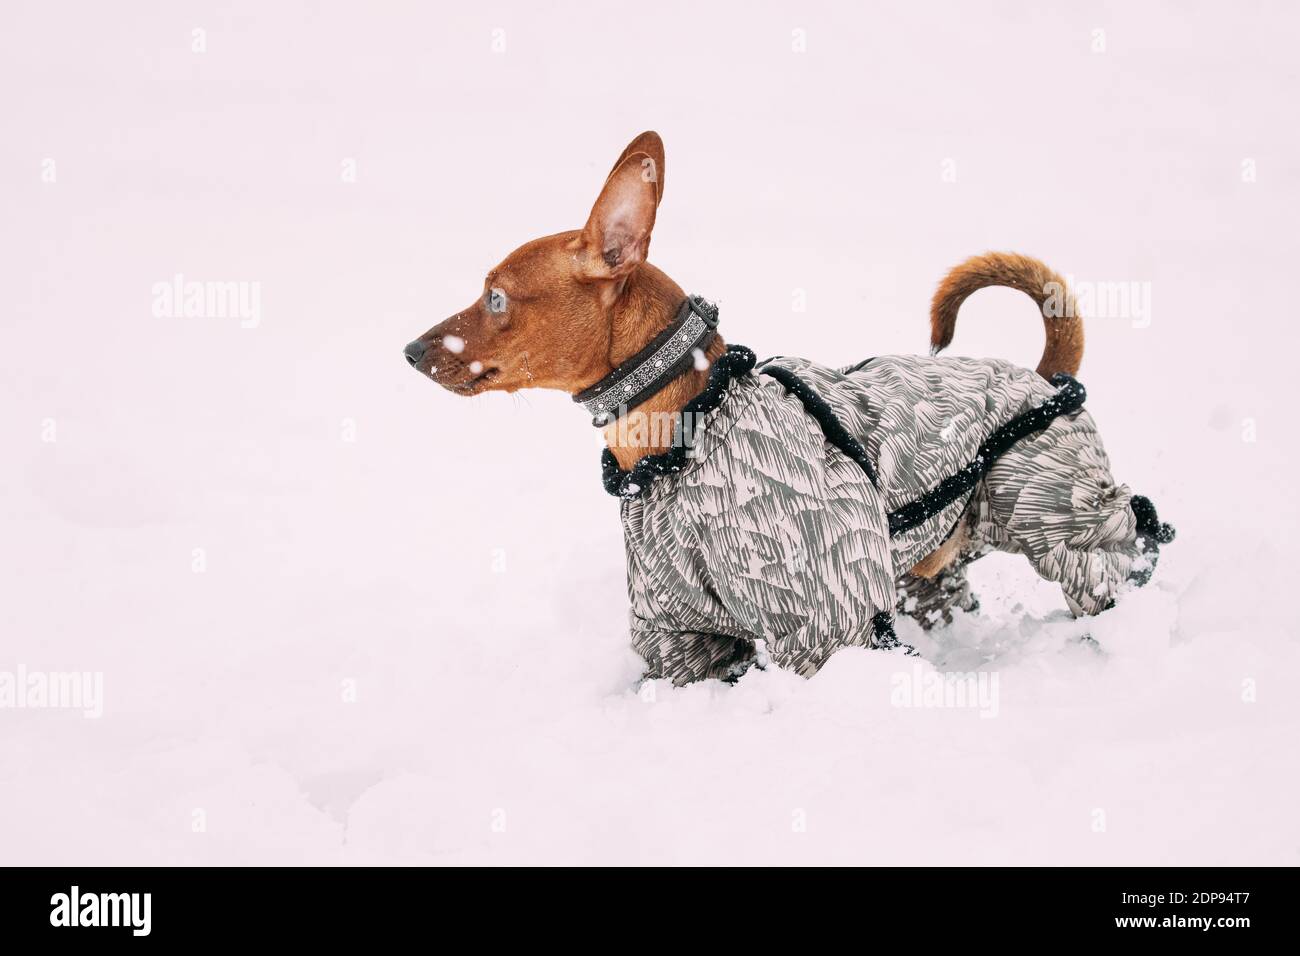 Dog Miniature Pinscher Pincher Min Pin In Outfit Walking Outdoor In Snow, Snowdrift. Winter Season. Playful Pets Outdoors Stock Photo